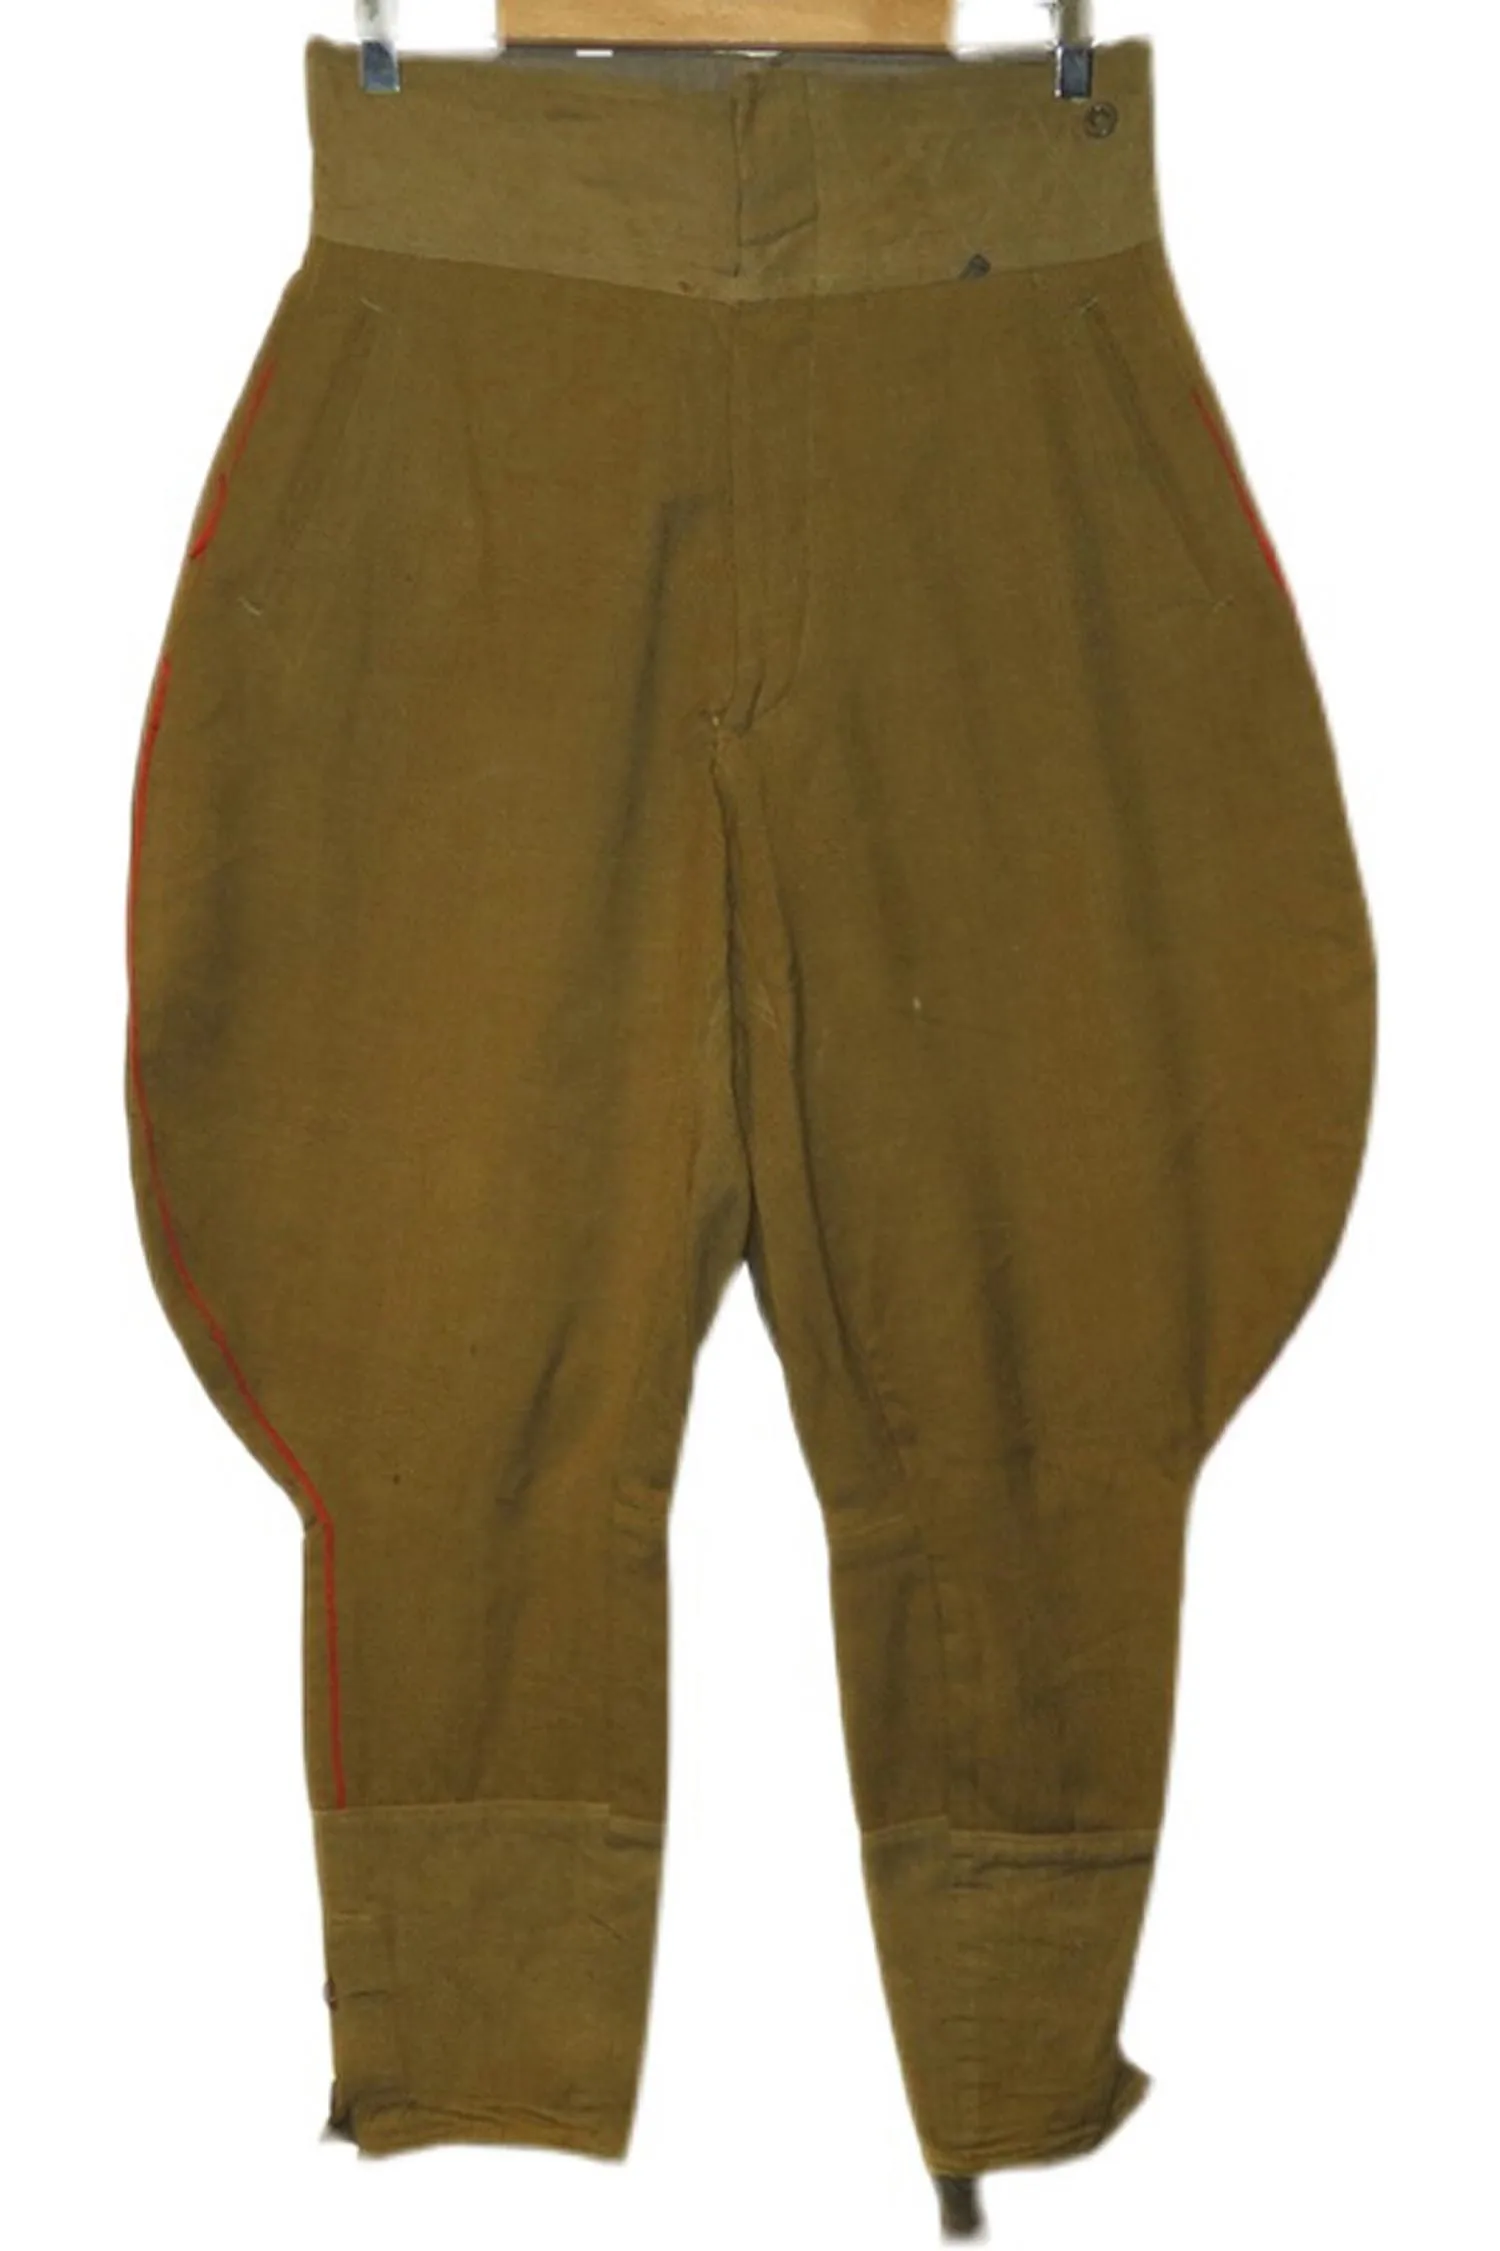 YANGHAOYUSONG Homemade knight pants breeches foot pants retro overalls couple casual pants pure cotton 9 points pants